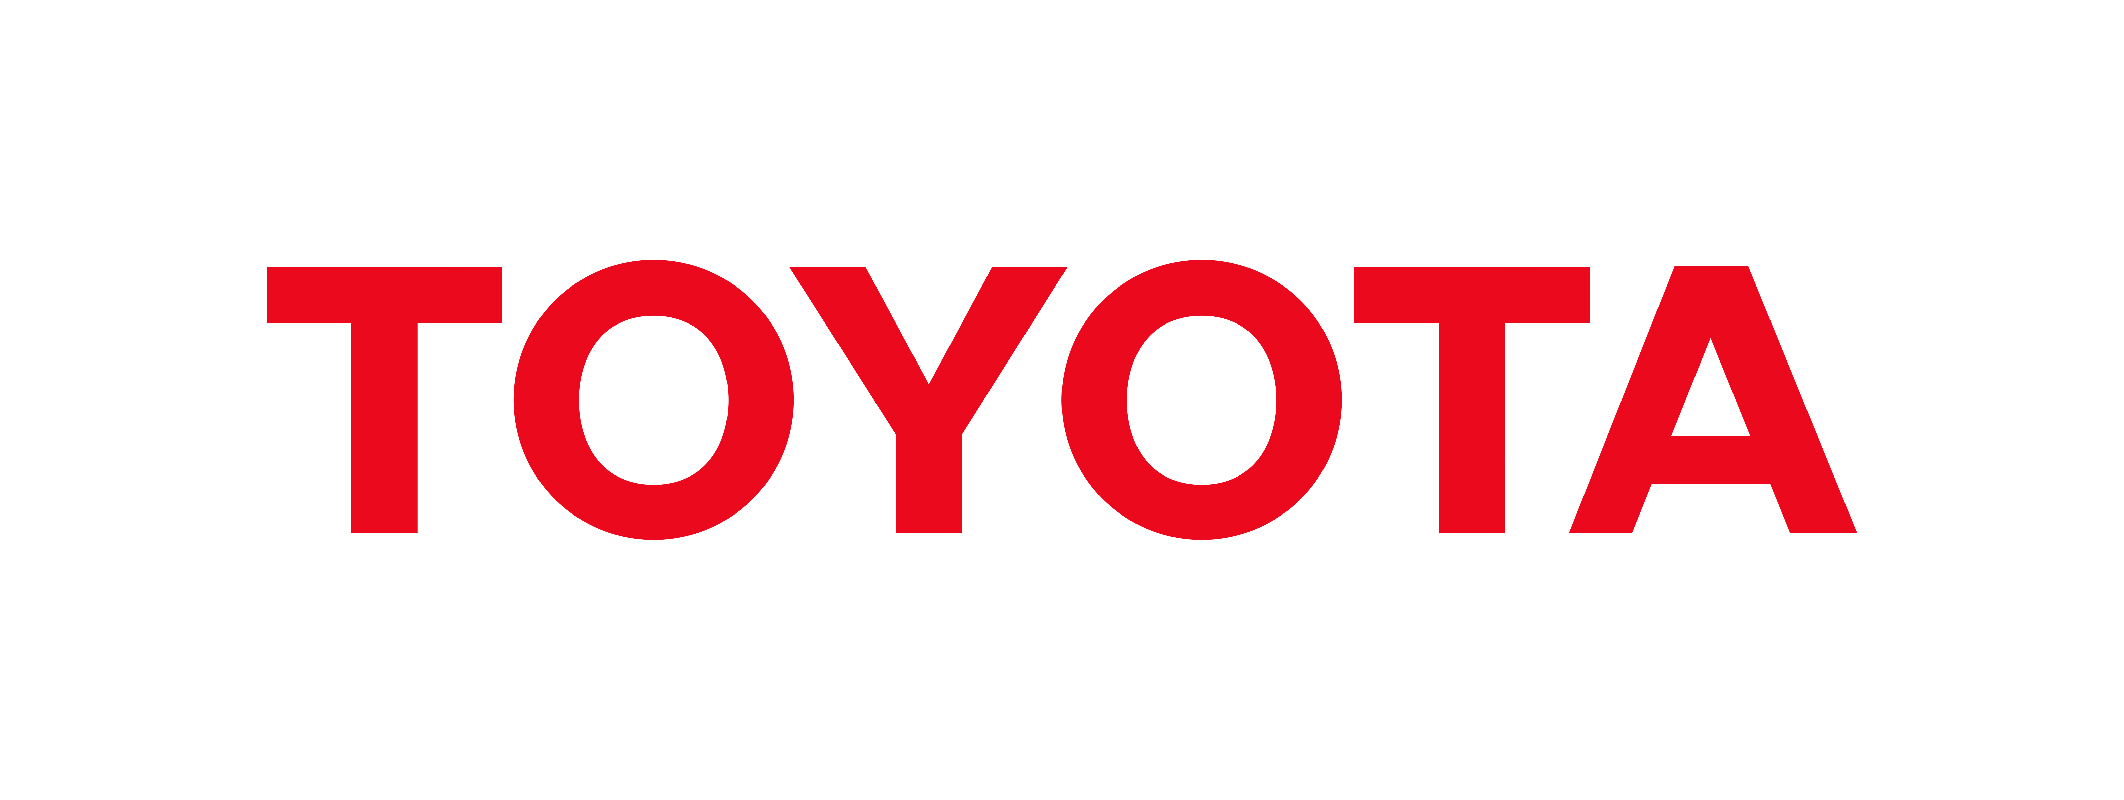 Toyota Logo - Red